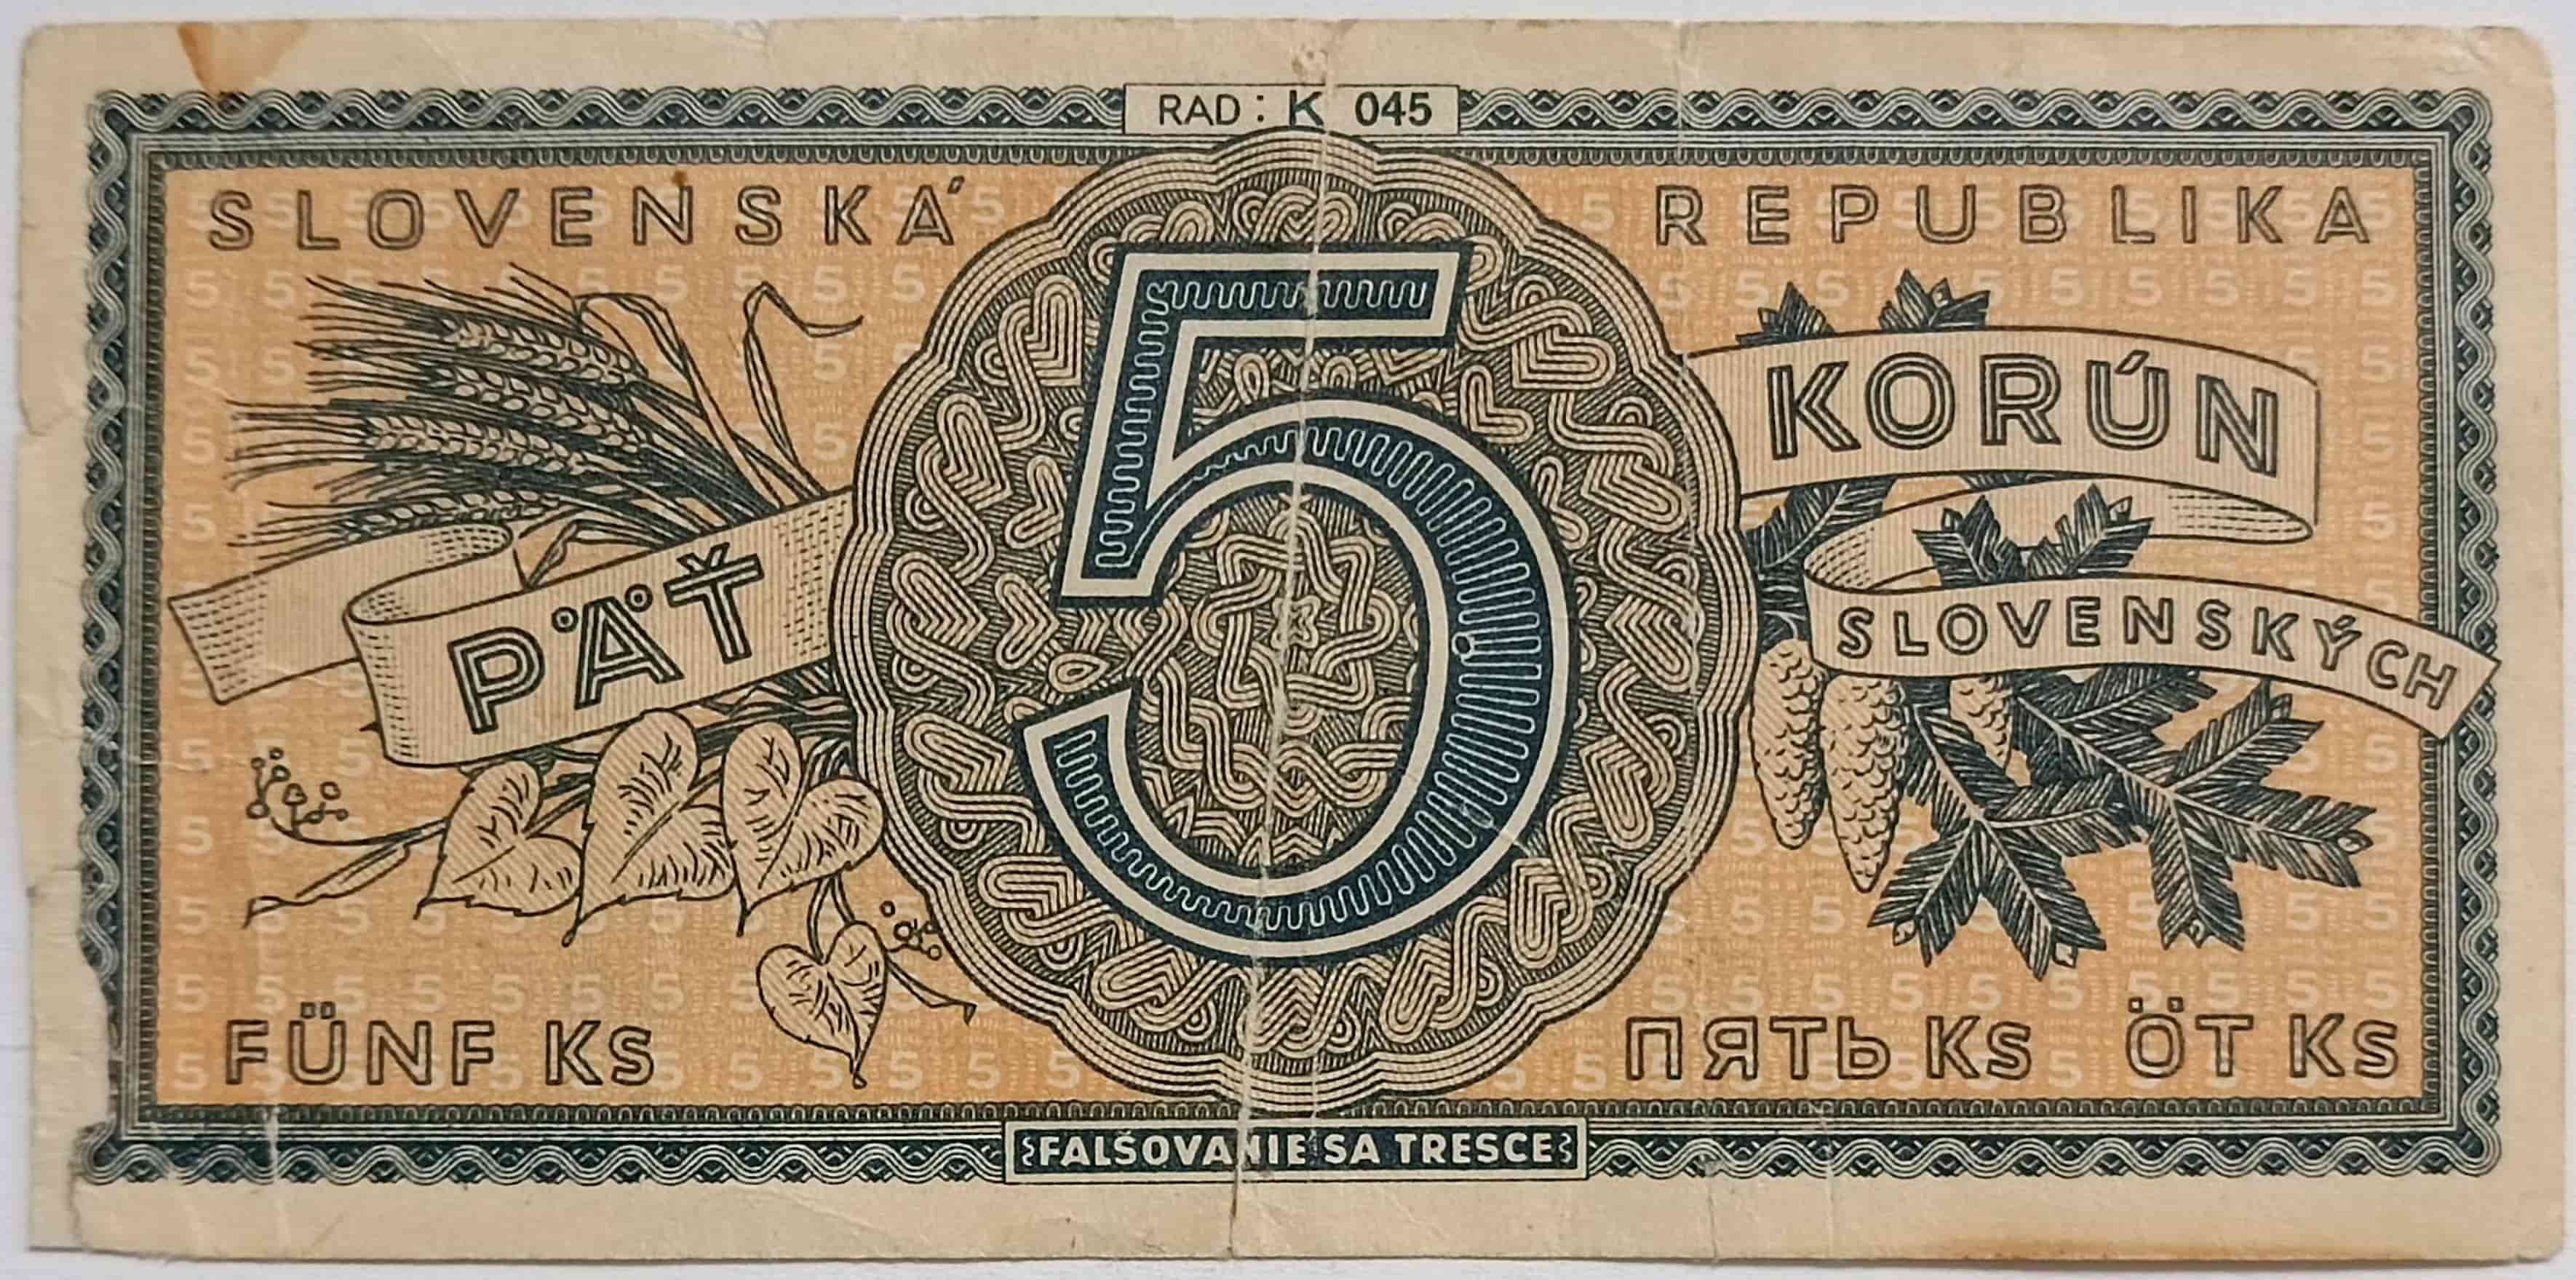 5Ks 1945 K045